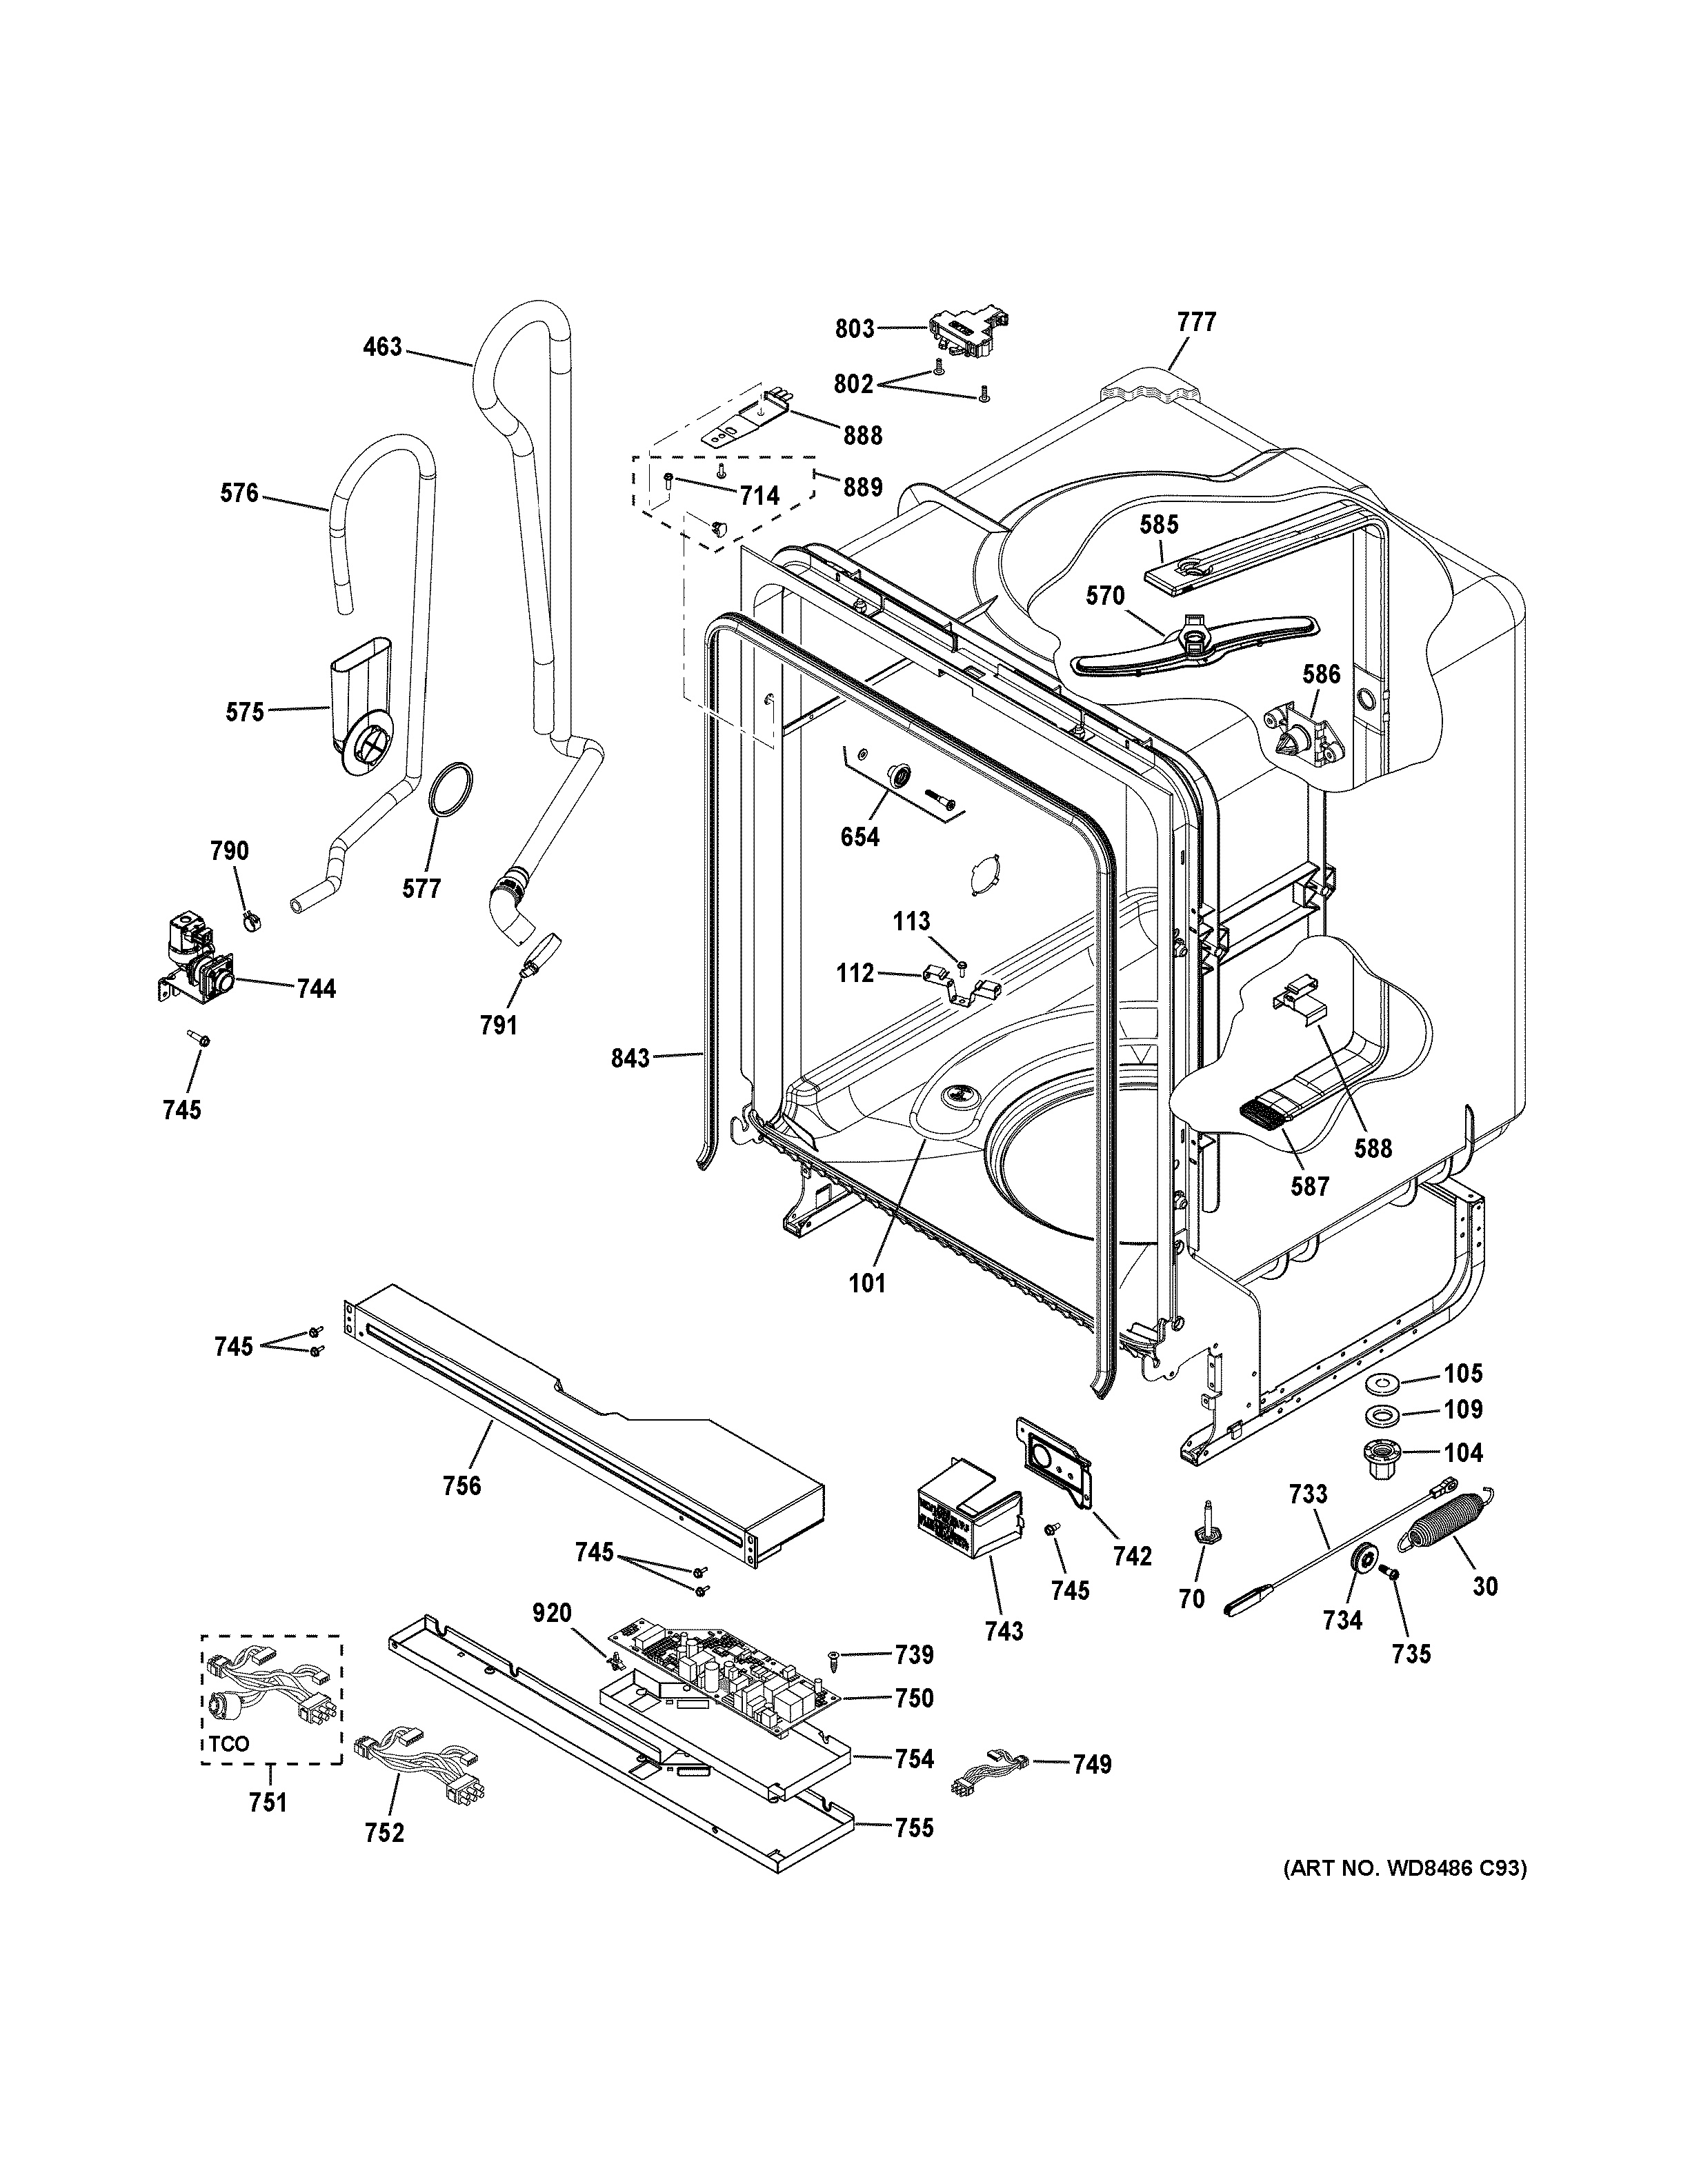 35 Asko Dishwasher Parts Diagram